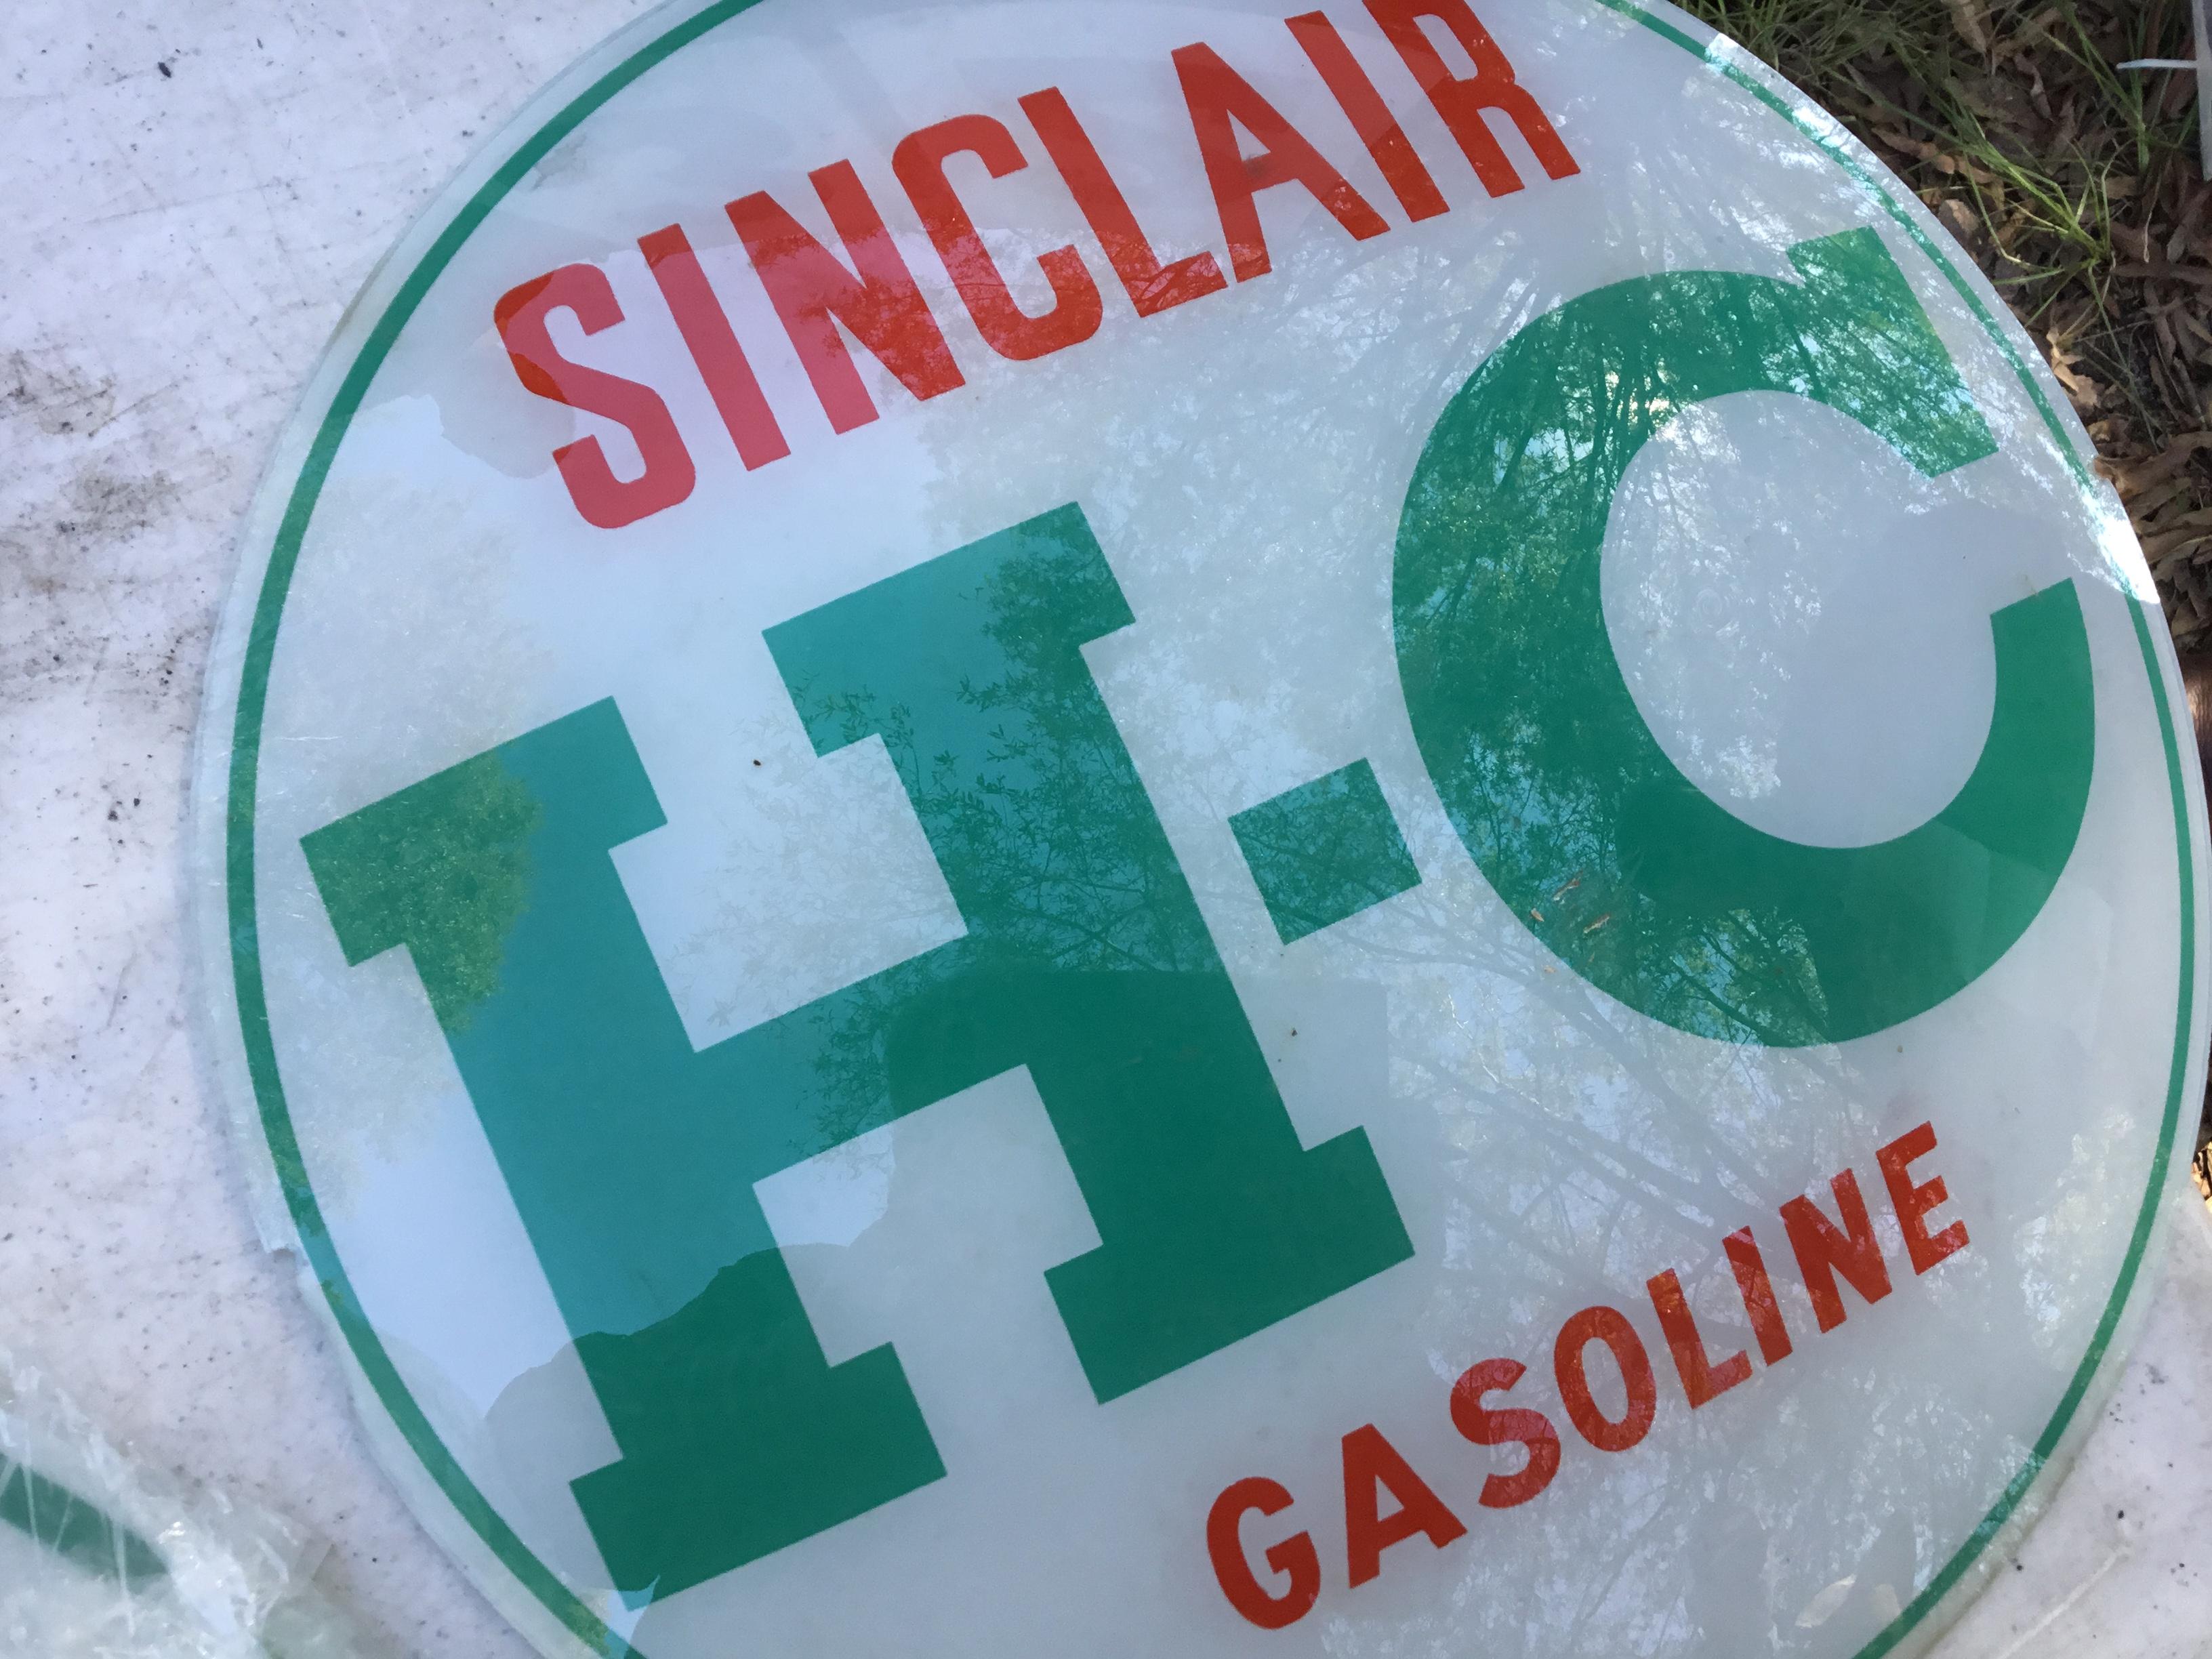 Set of 3 replacement globe fronts for gas pump; 2-Sinclair Power-X gasoline, 1-Sinclair H-C gasoline